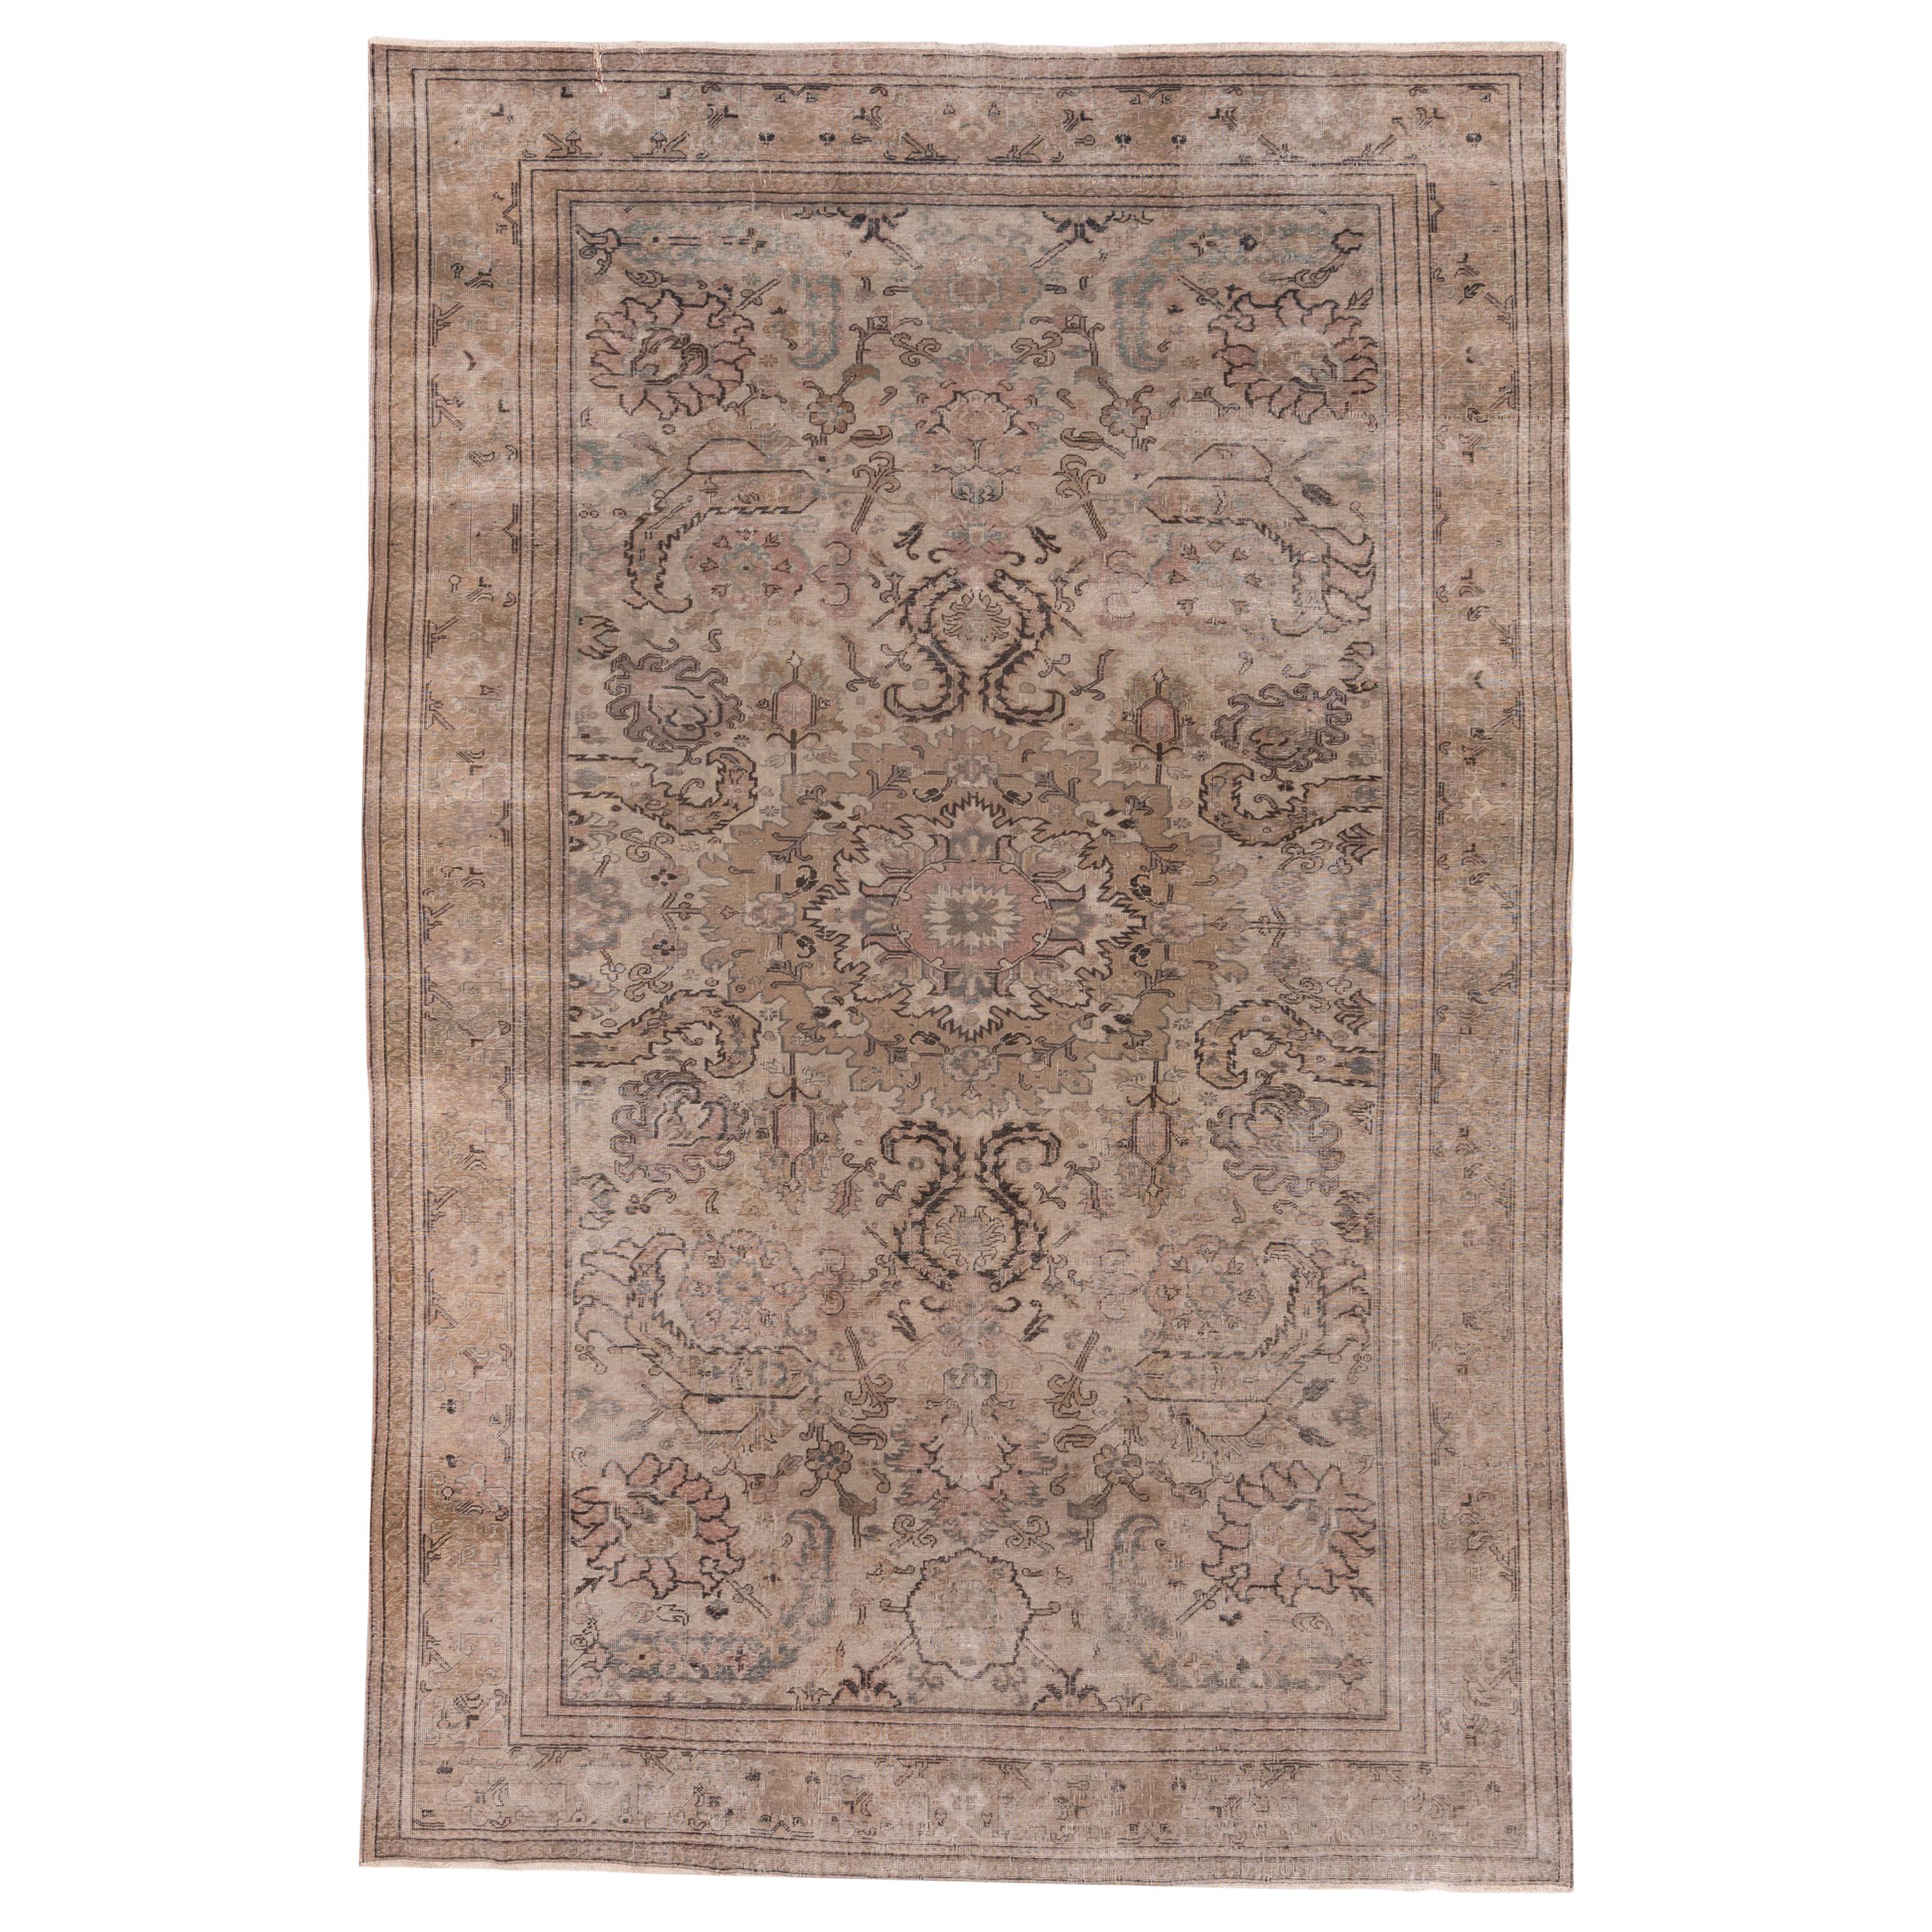 Antique Kaisary Carpet with Soft Tones